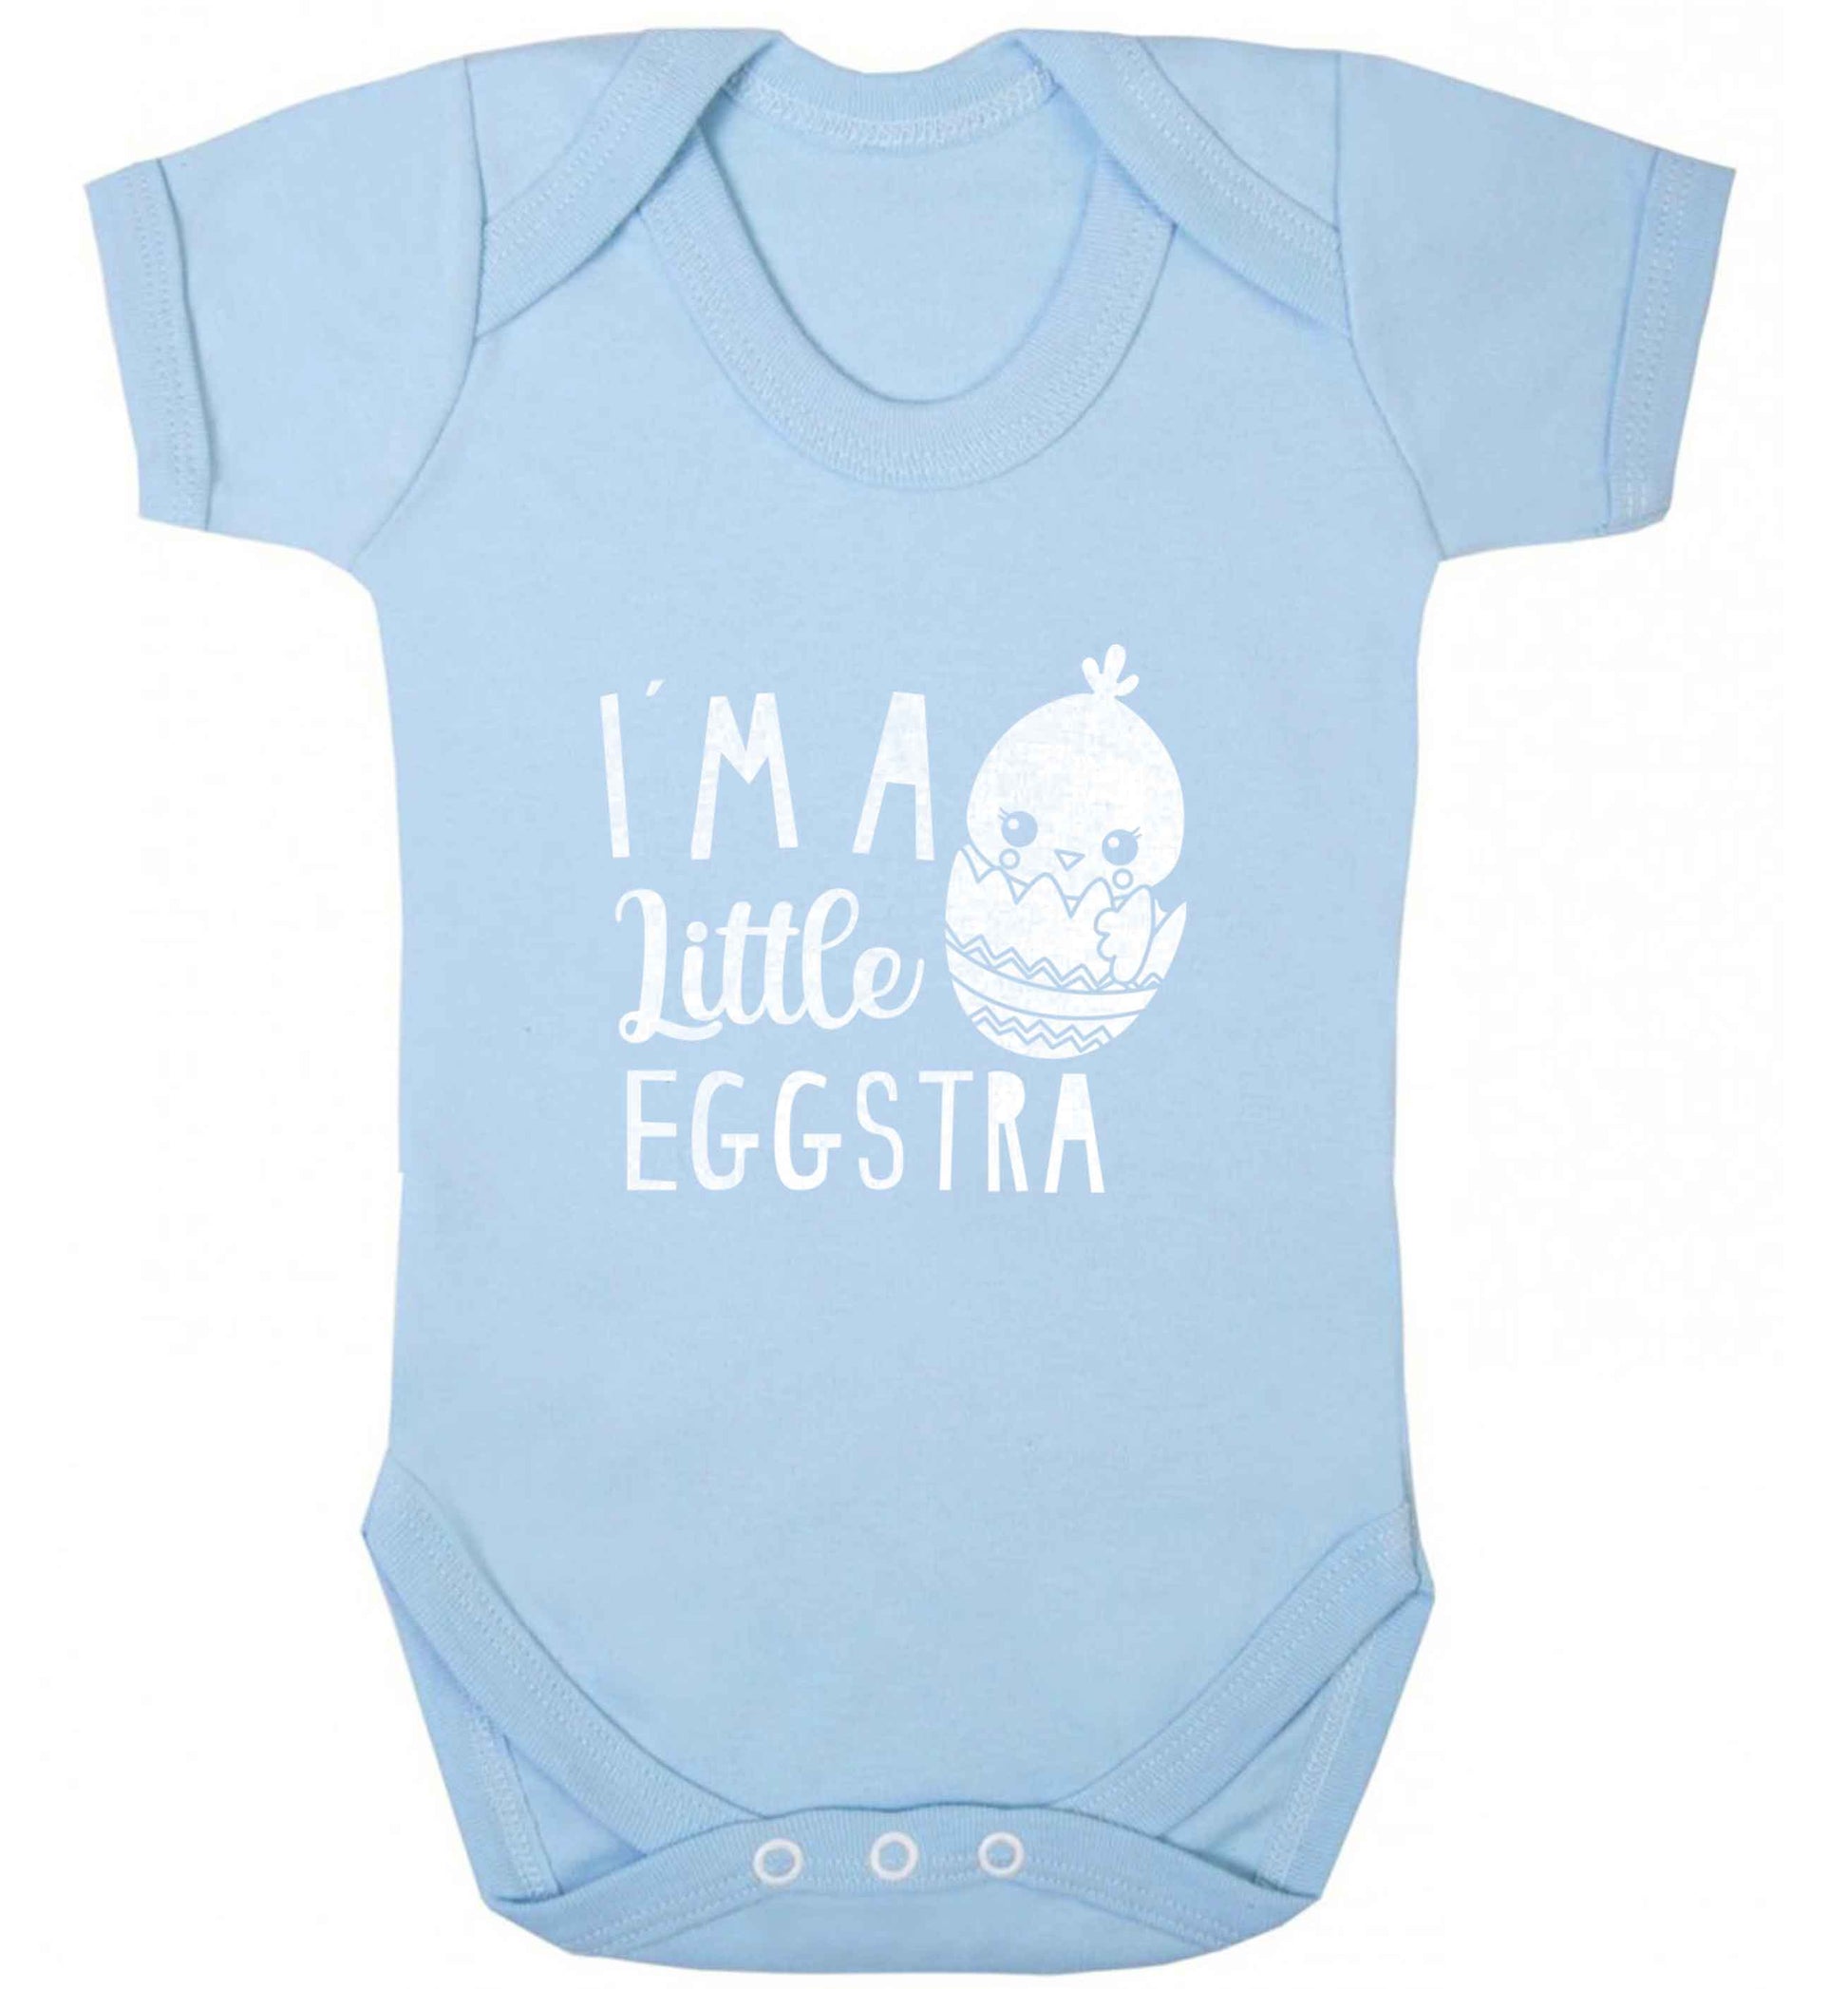 I'm a little eggstra baby vest pale blue 18-24 months